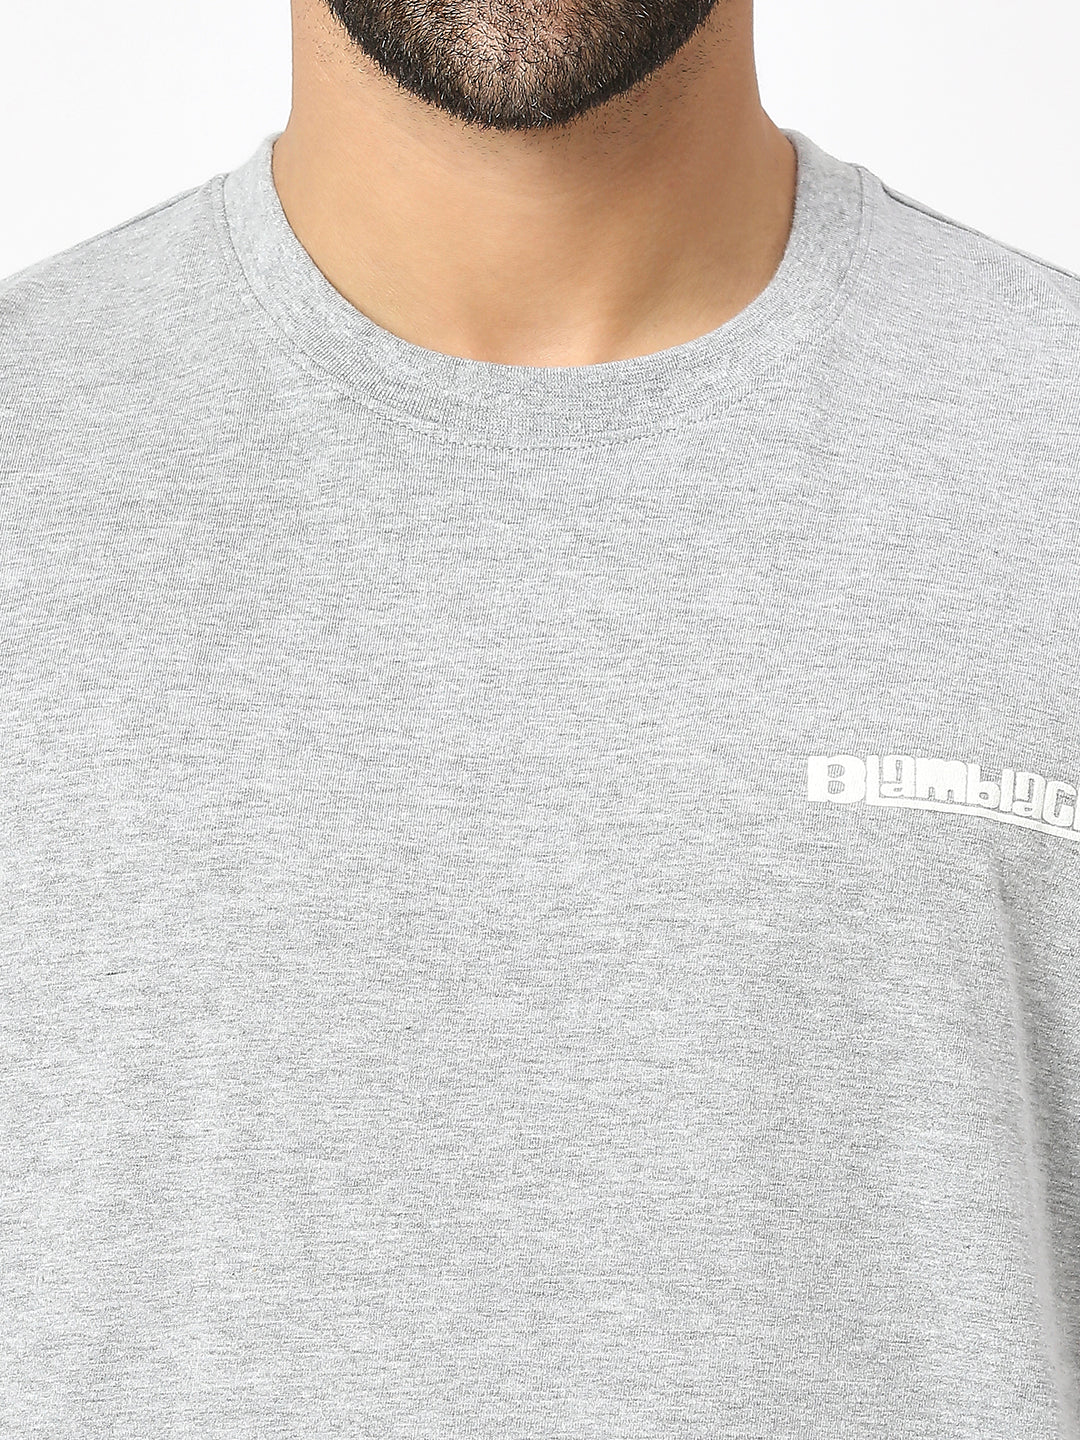 BLAMBLACK Men's Over-sized Puff Print T-Shirt